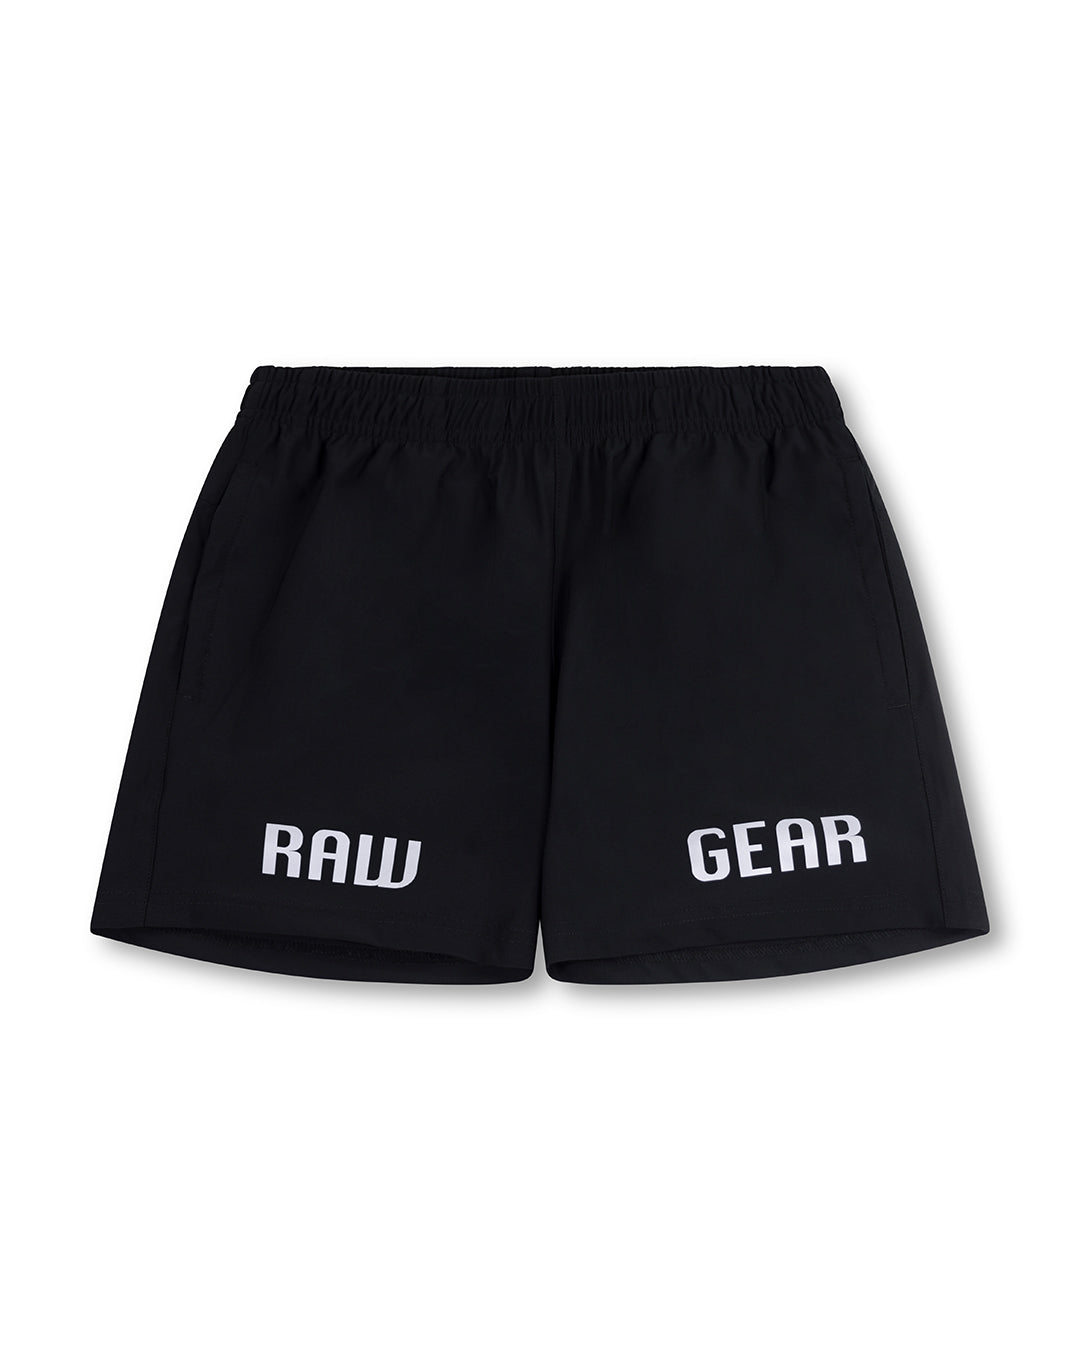 Raw Gear Short Shorts